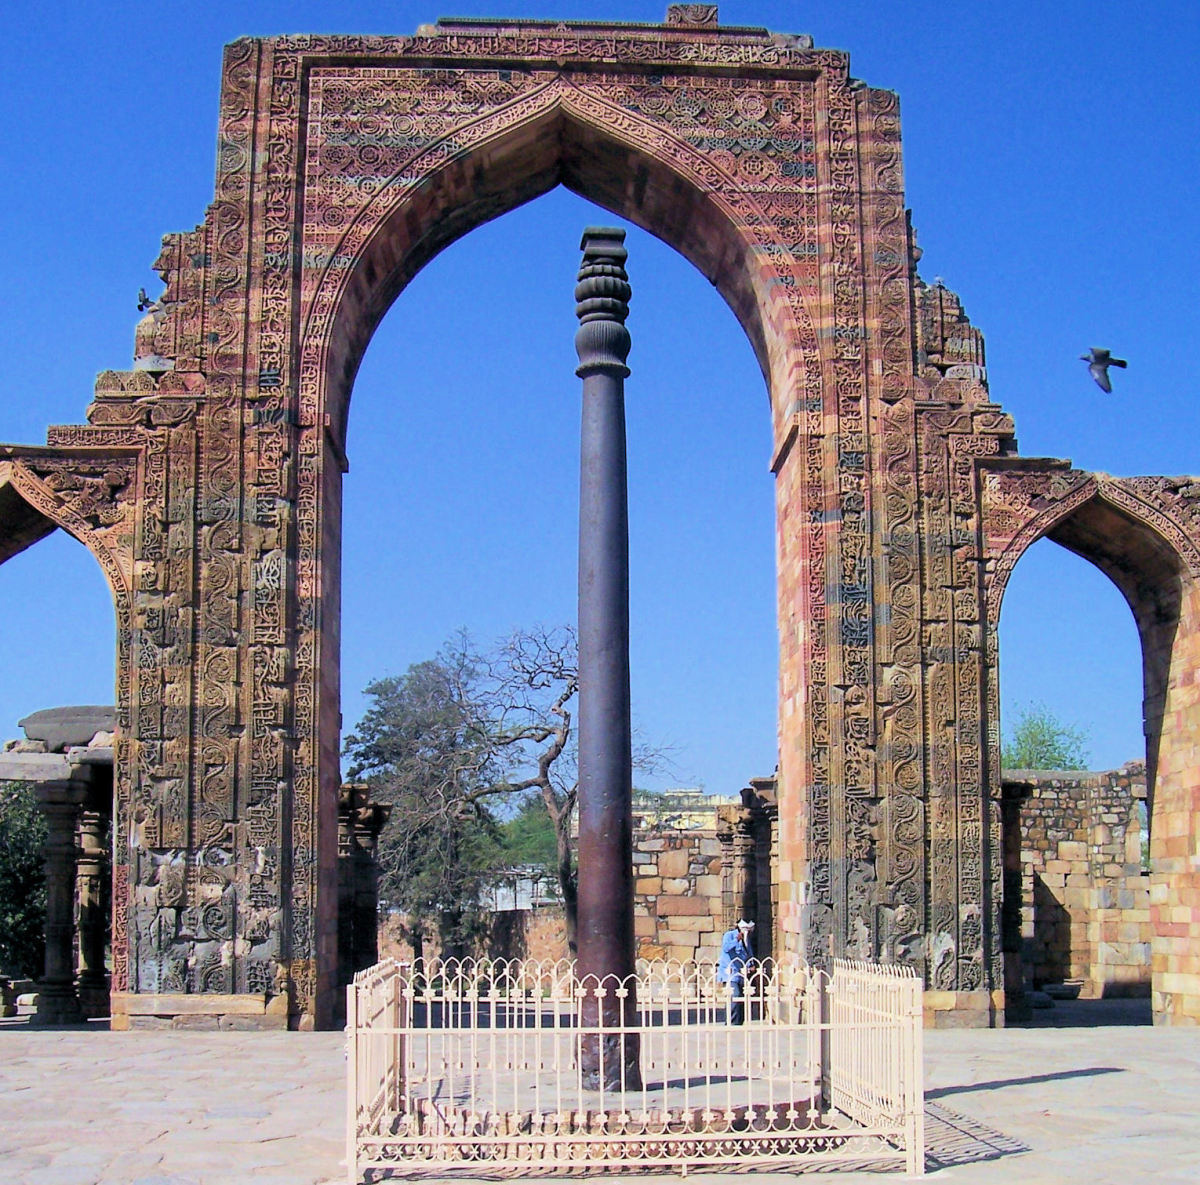 The Mystery of Delhi’s Iron Pillar